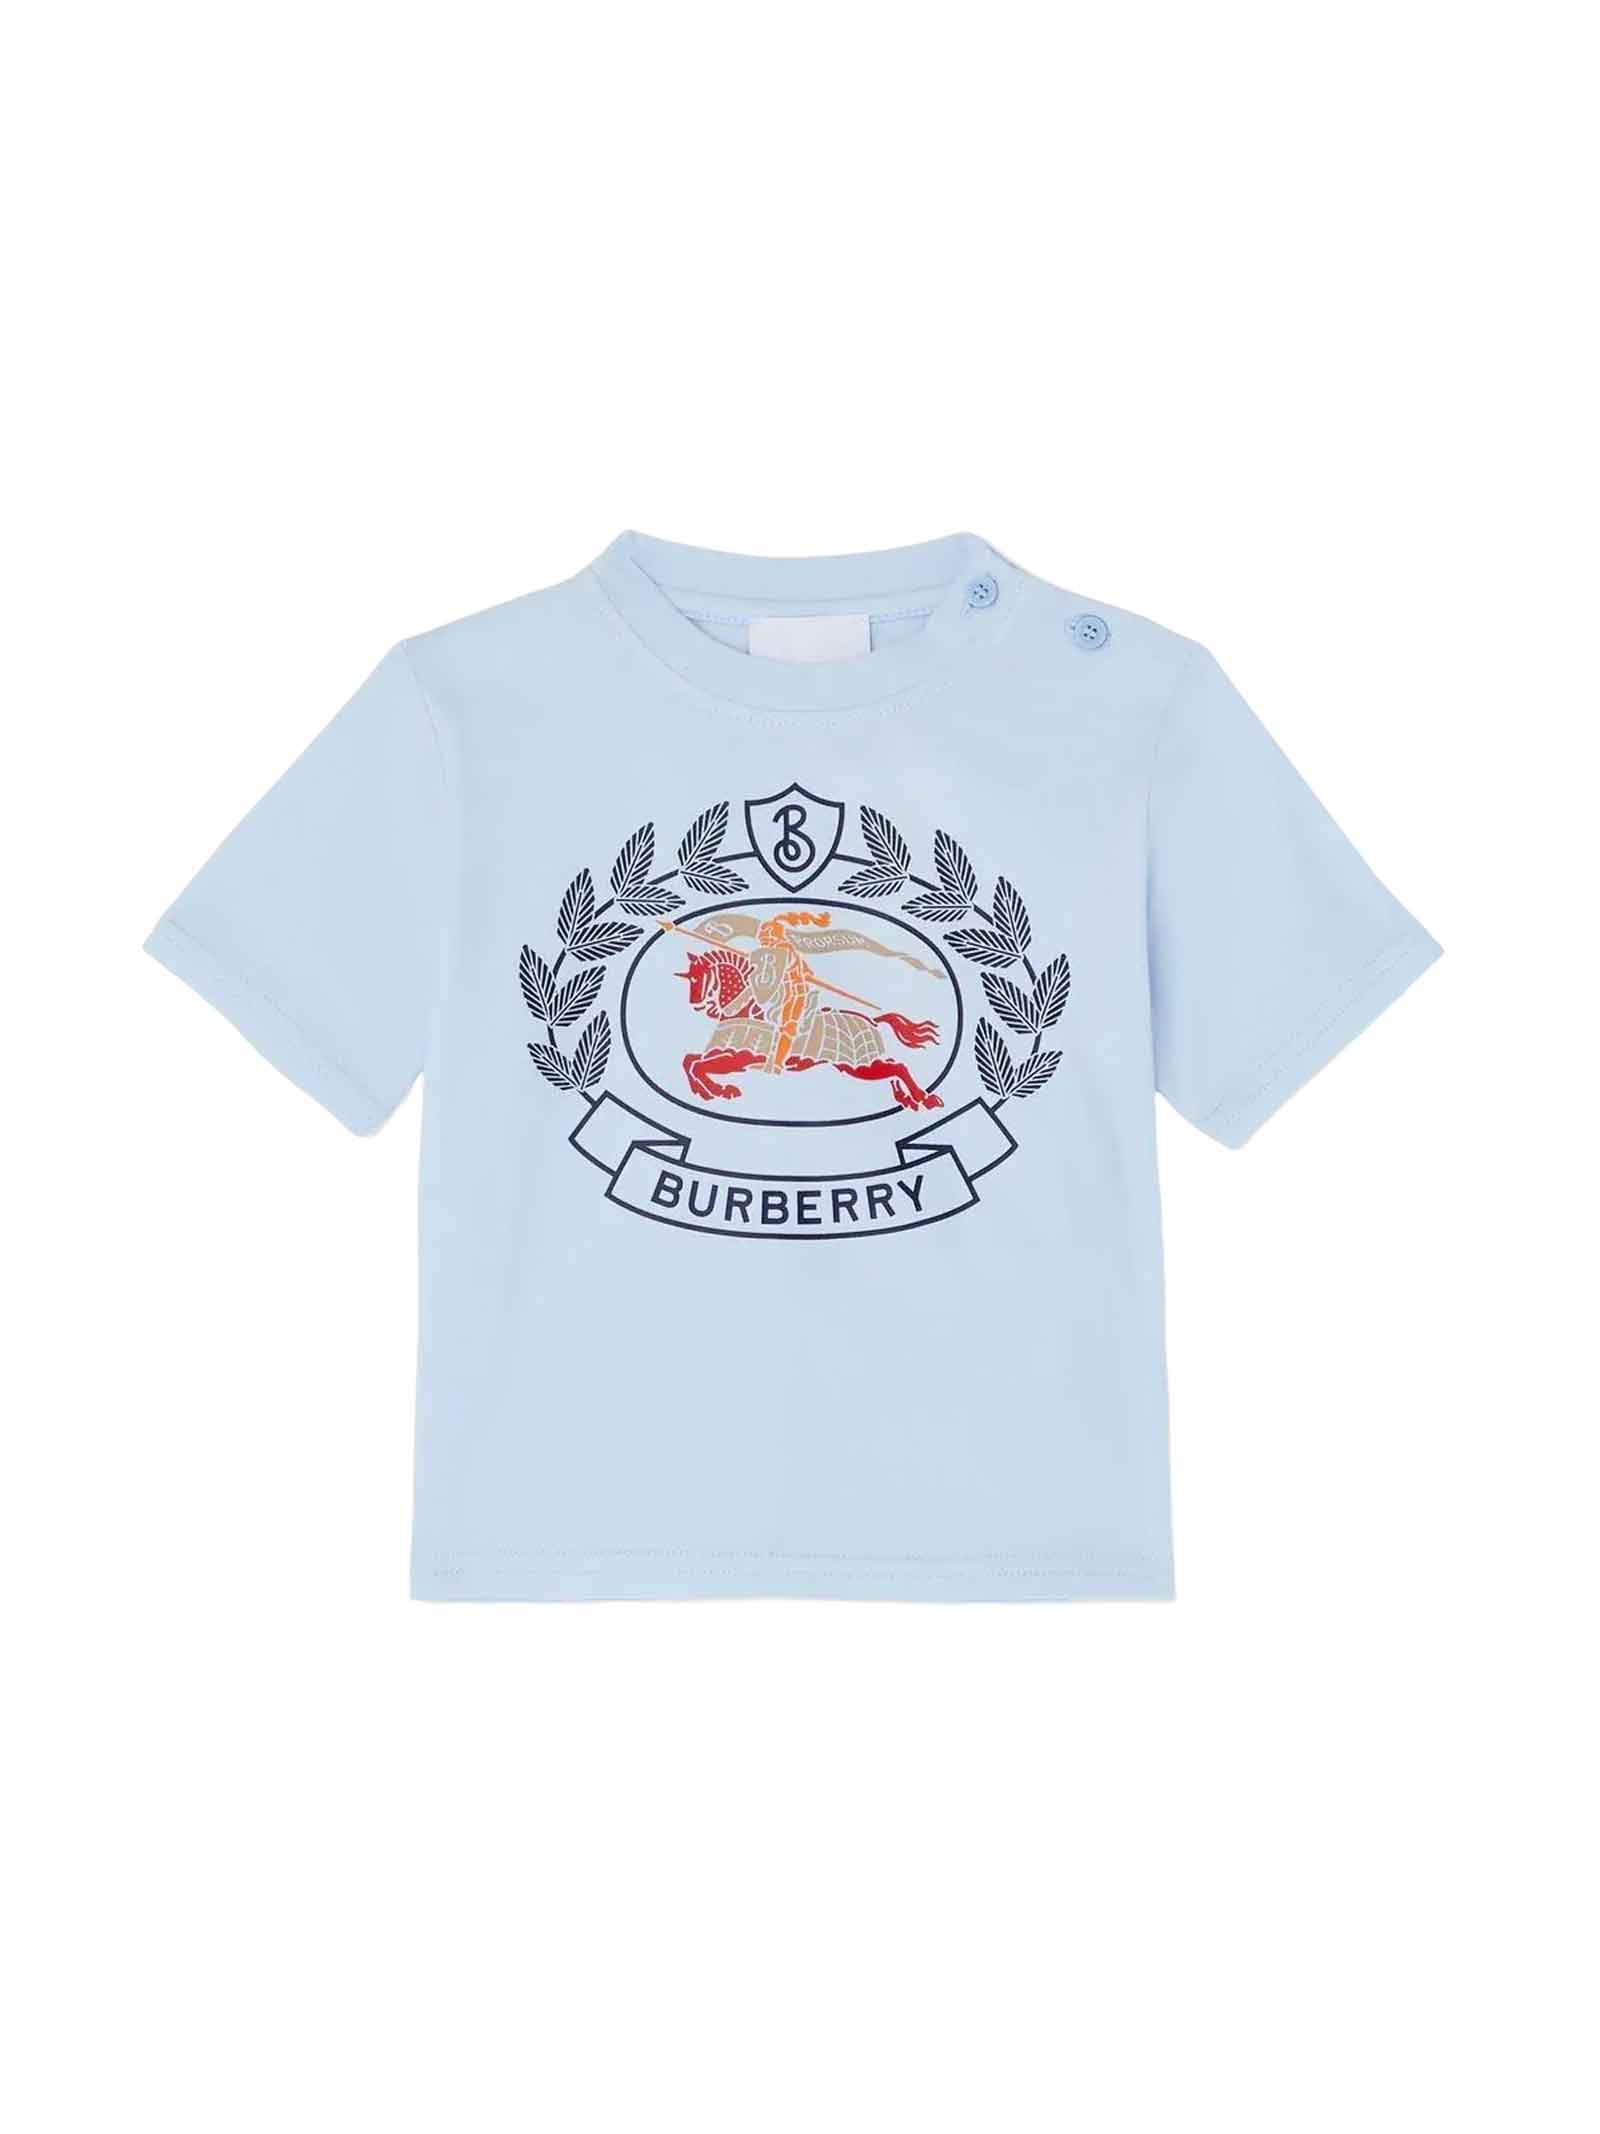 Burberry Blue T-shirt Baby Boy